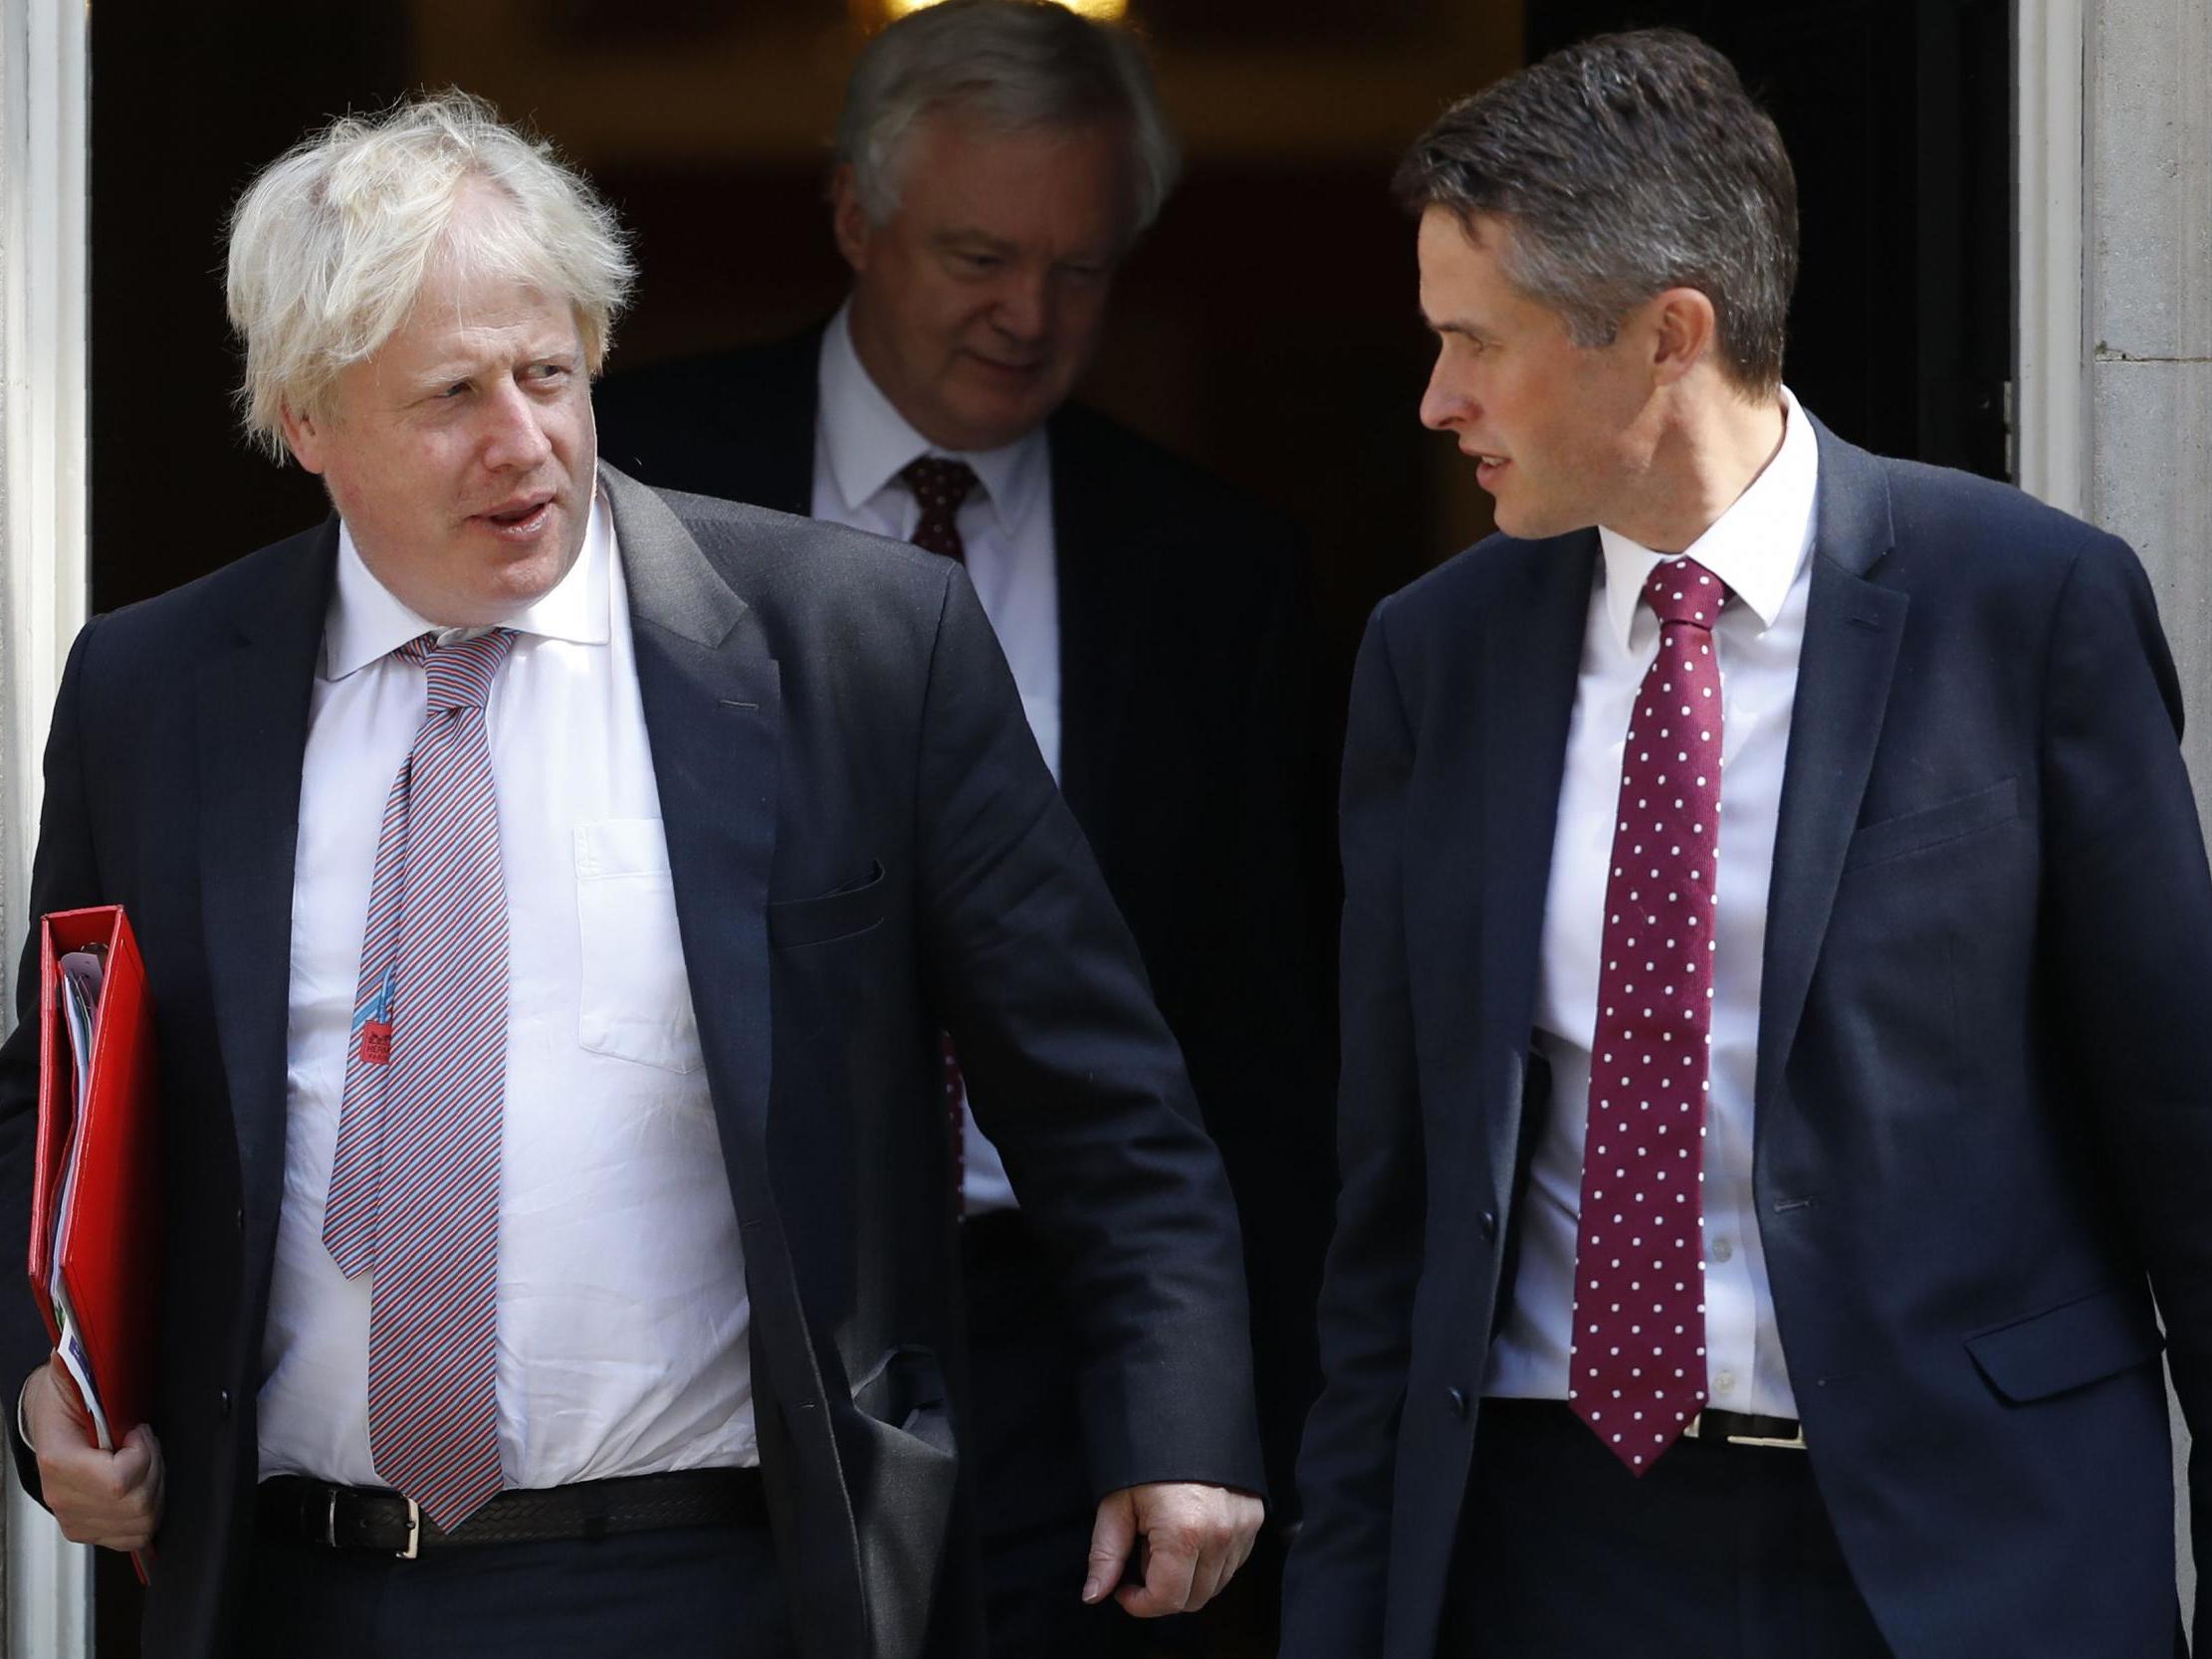 Boris Johnson with education secretary Gavin Williamson